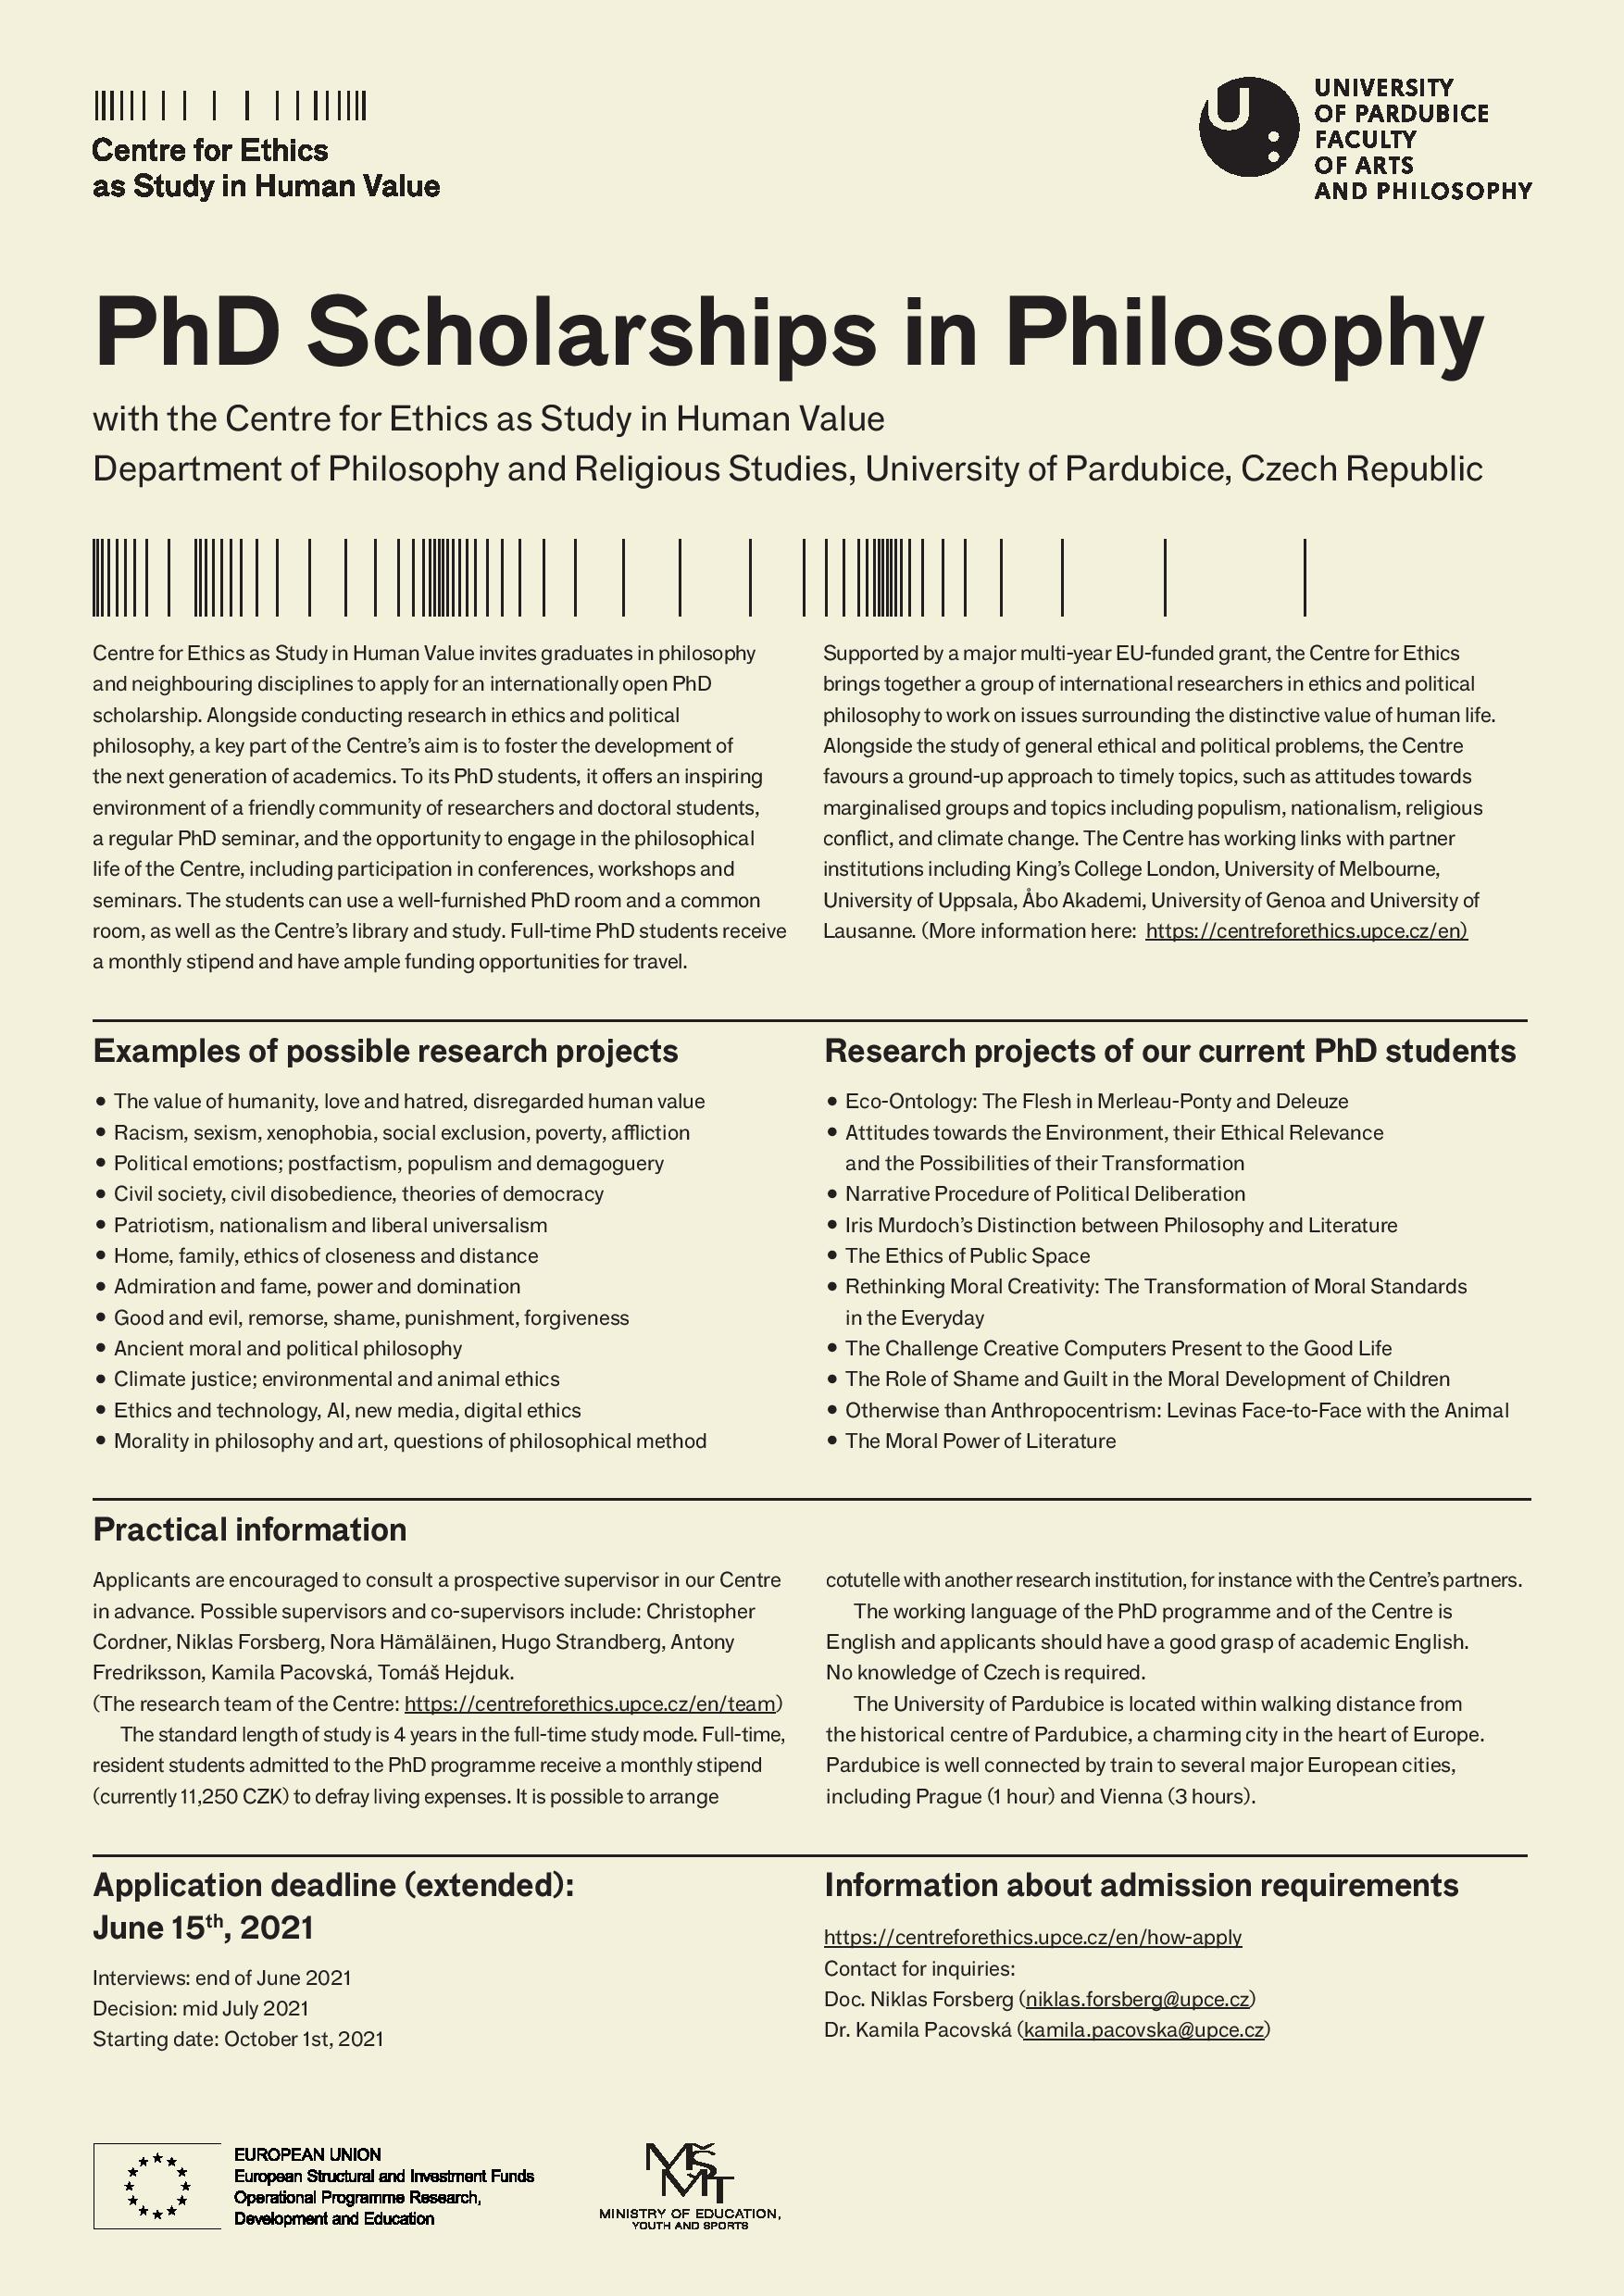 PHD Scholarship